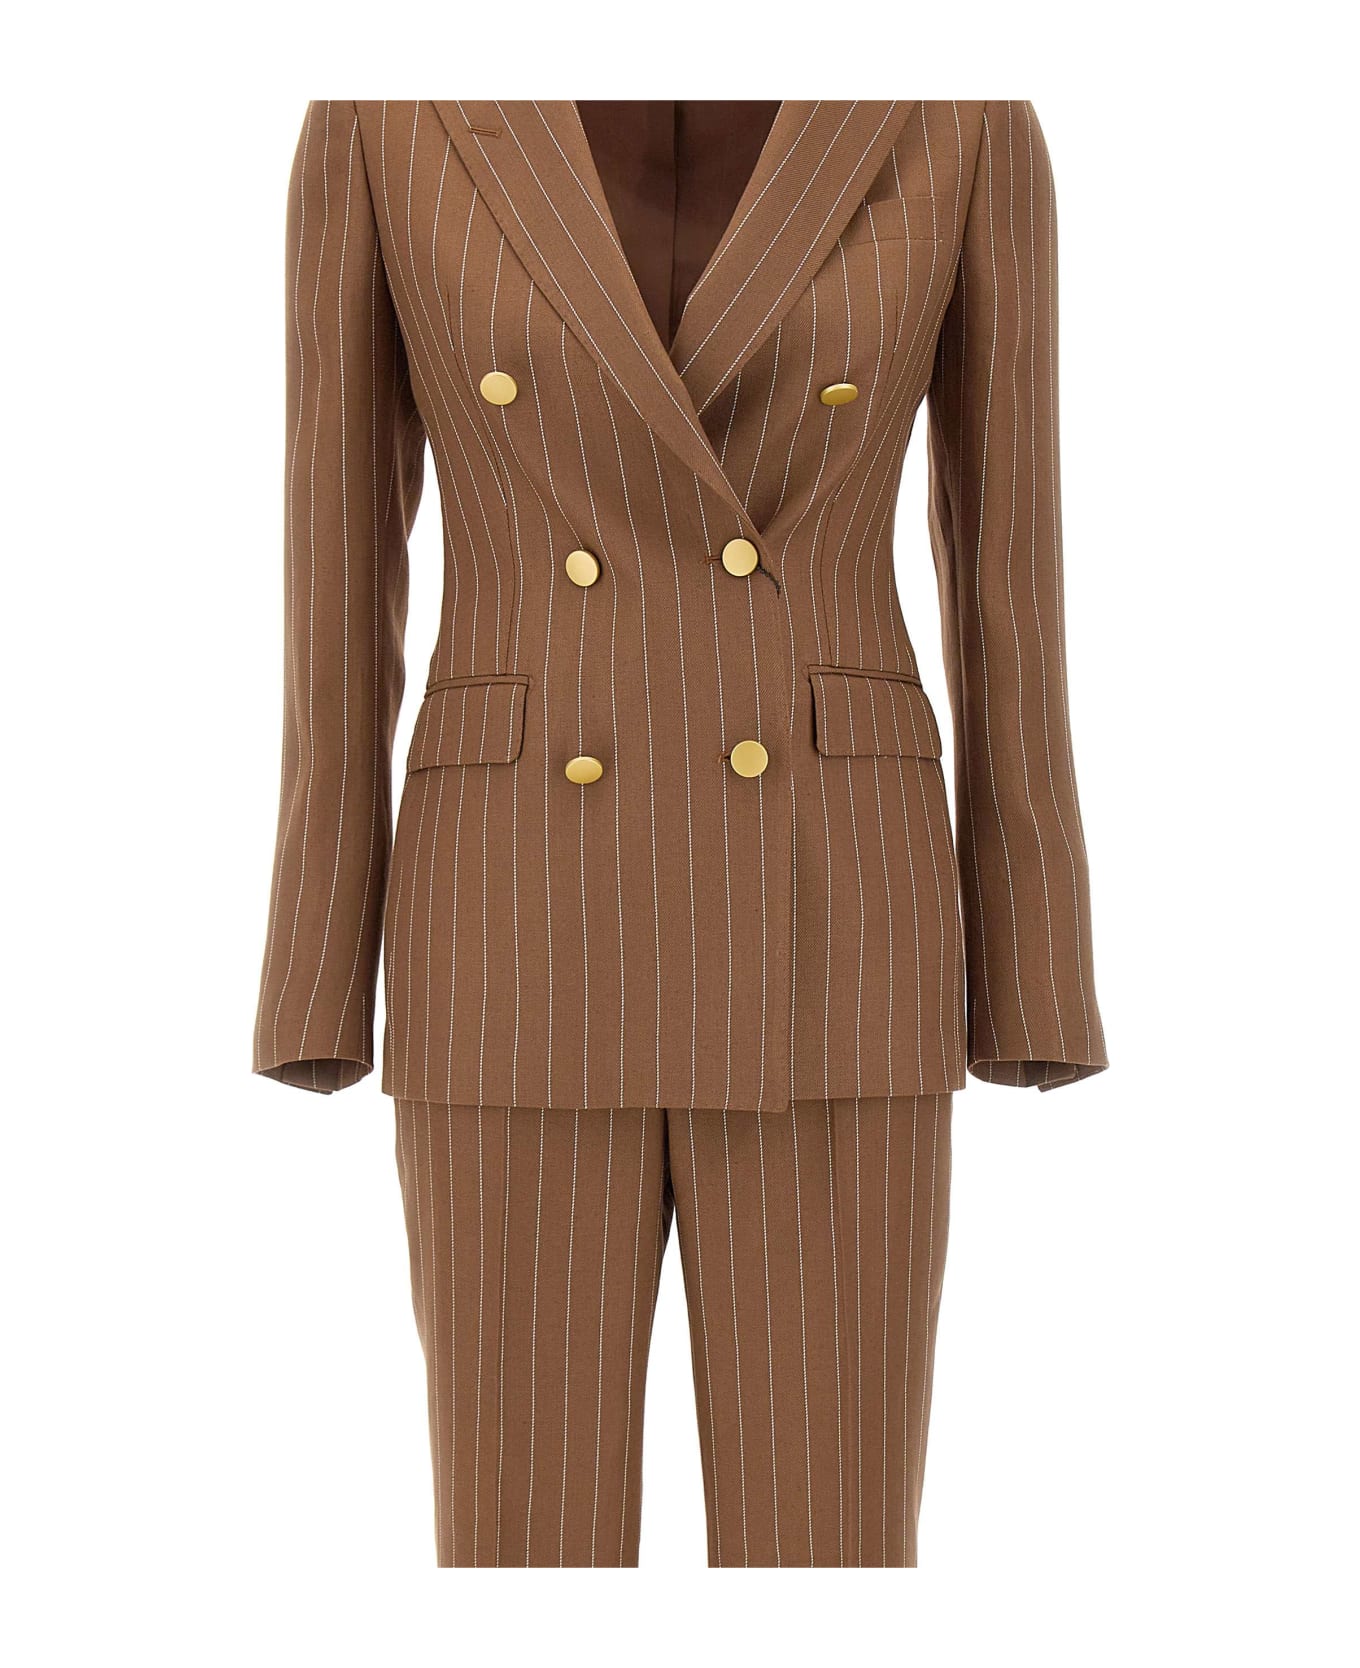 Tagliatore "parigi" Linen Two-piece Suit - BROWN ボトムス